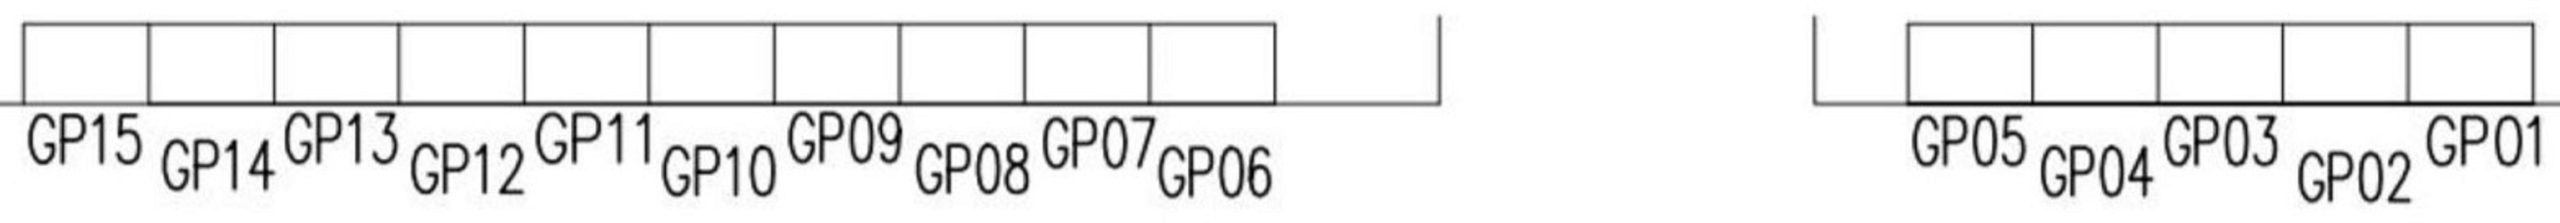 Storage Compound Rows GP01-GP15